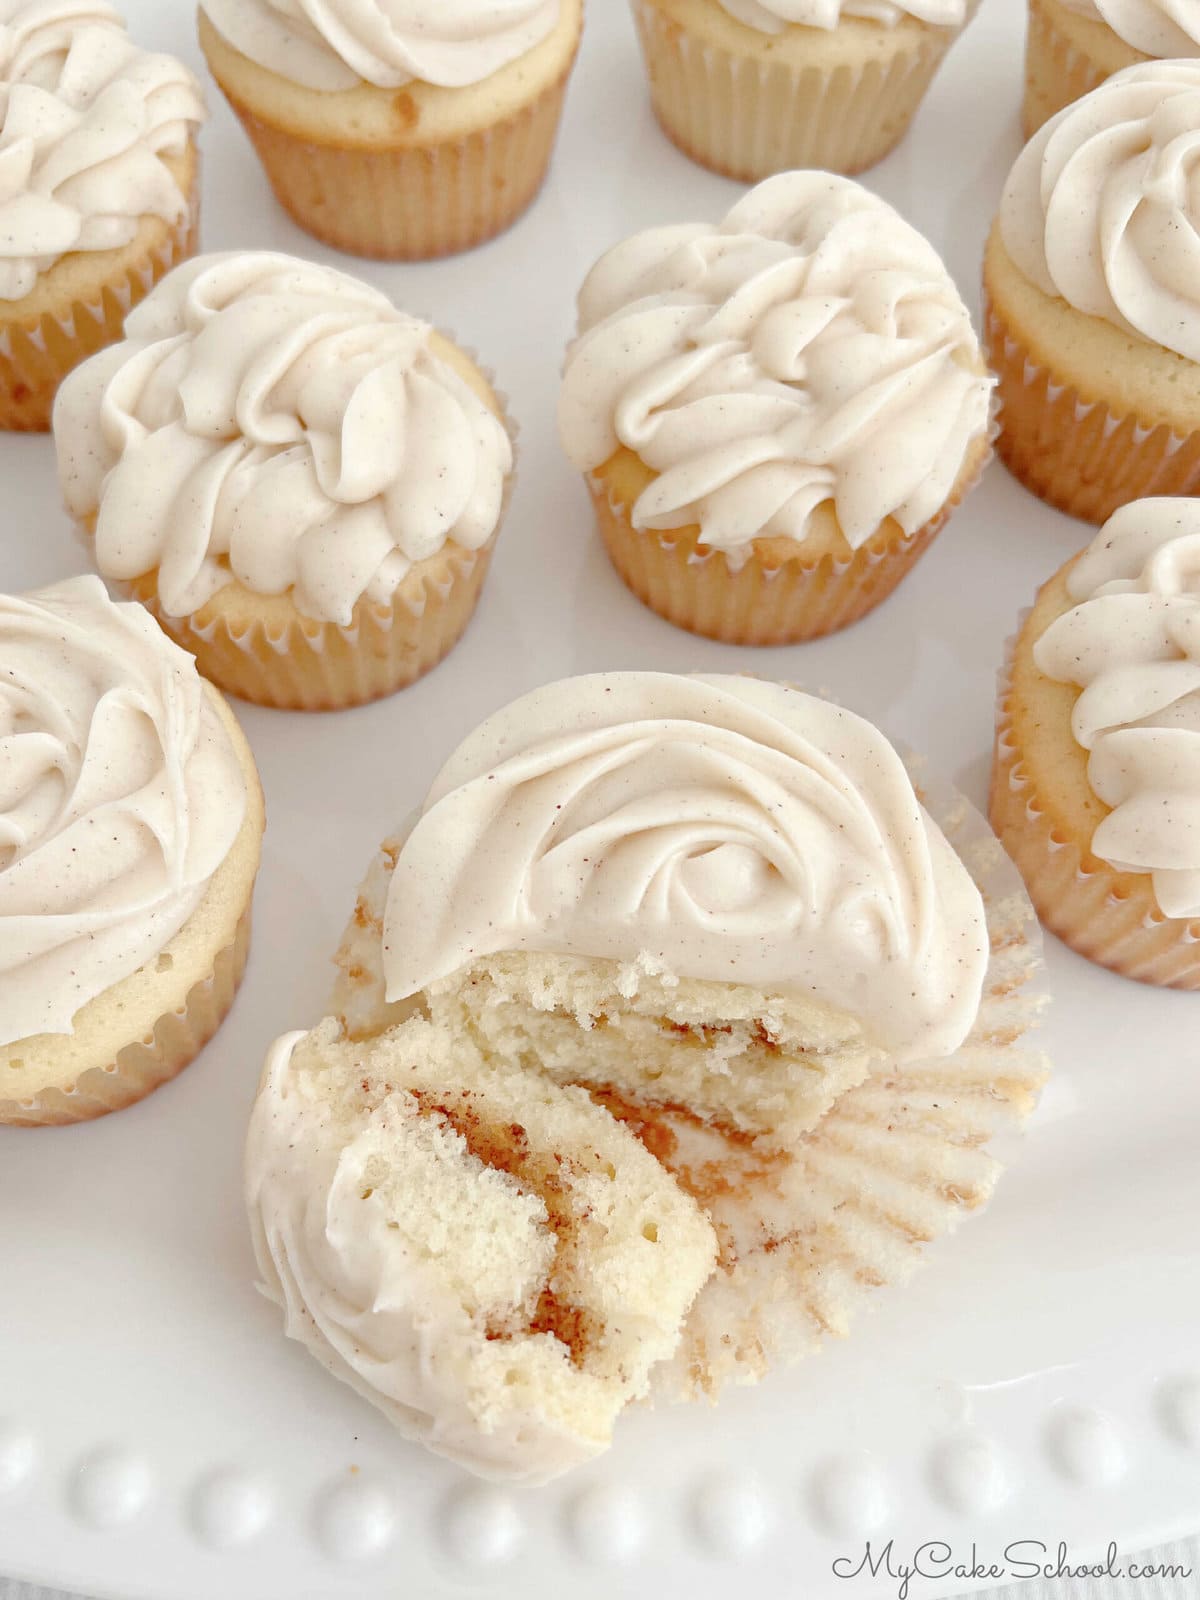 Vanilla Giant Cupcake Recipe  Baking, Recipes and Tutorials - The